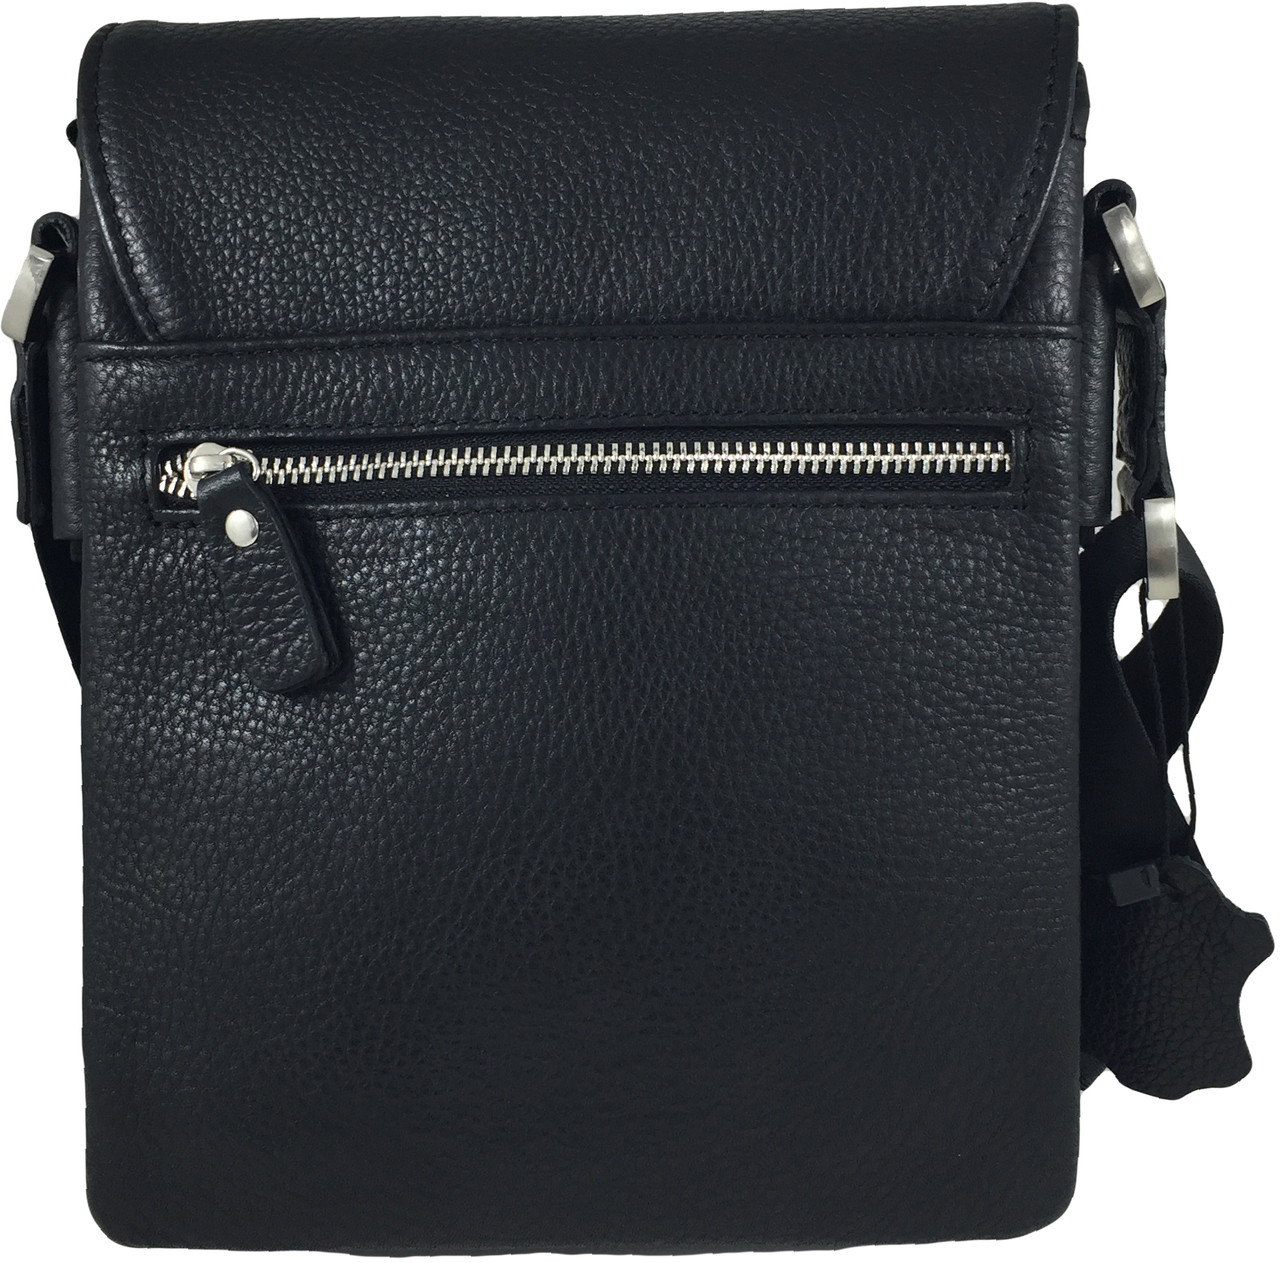 Black Leather Crossbody Bag Small Flap Messenger Bag Quality